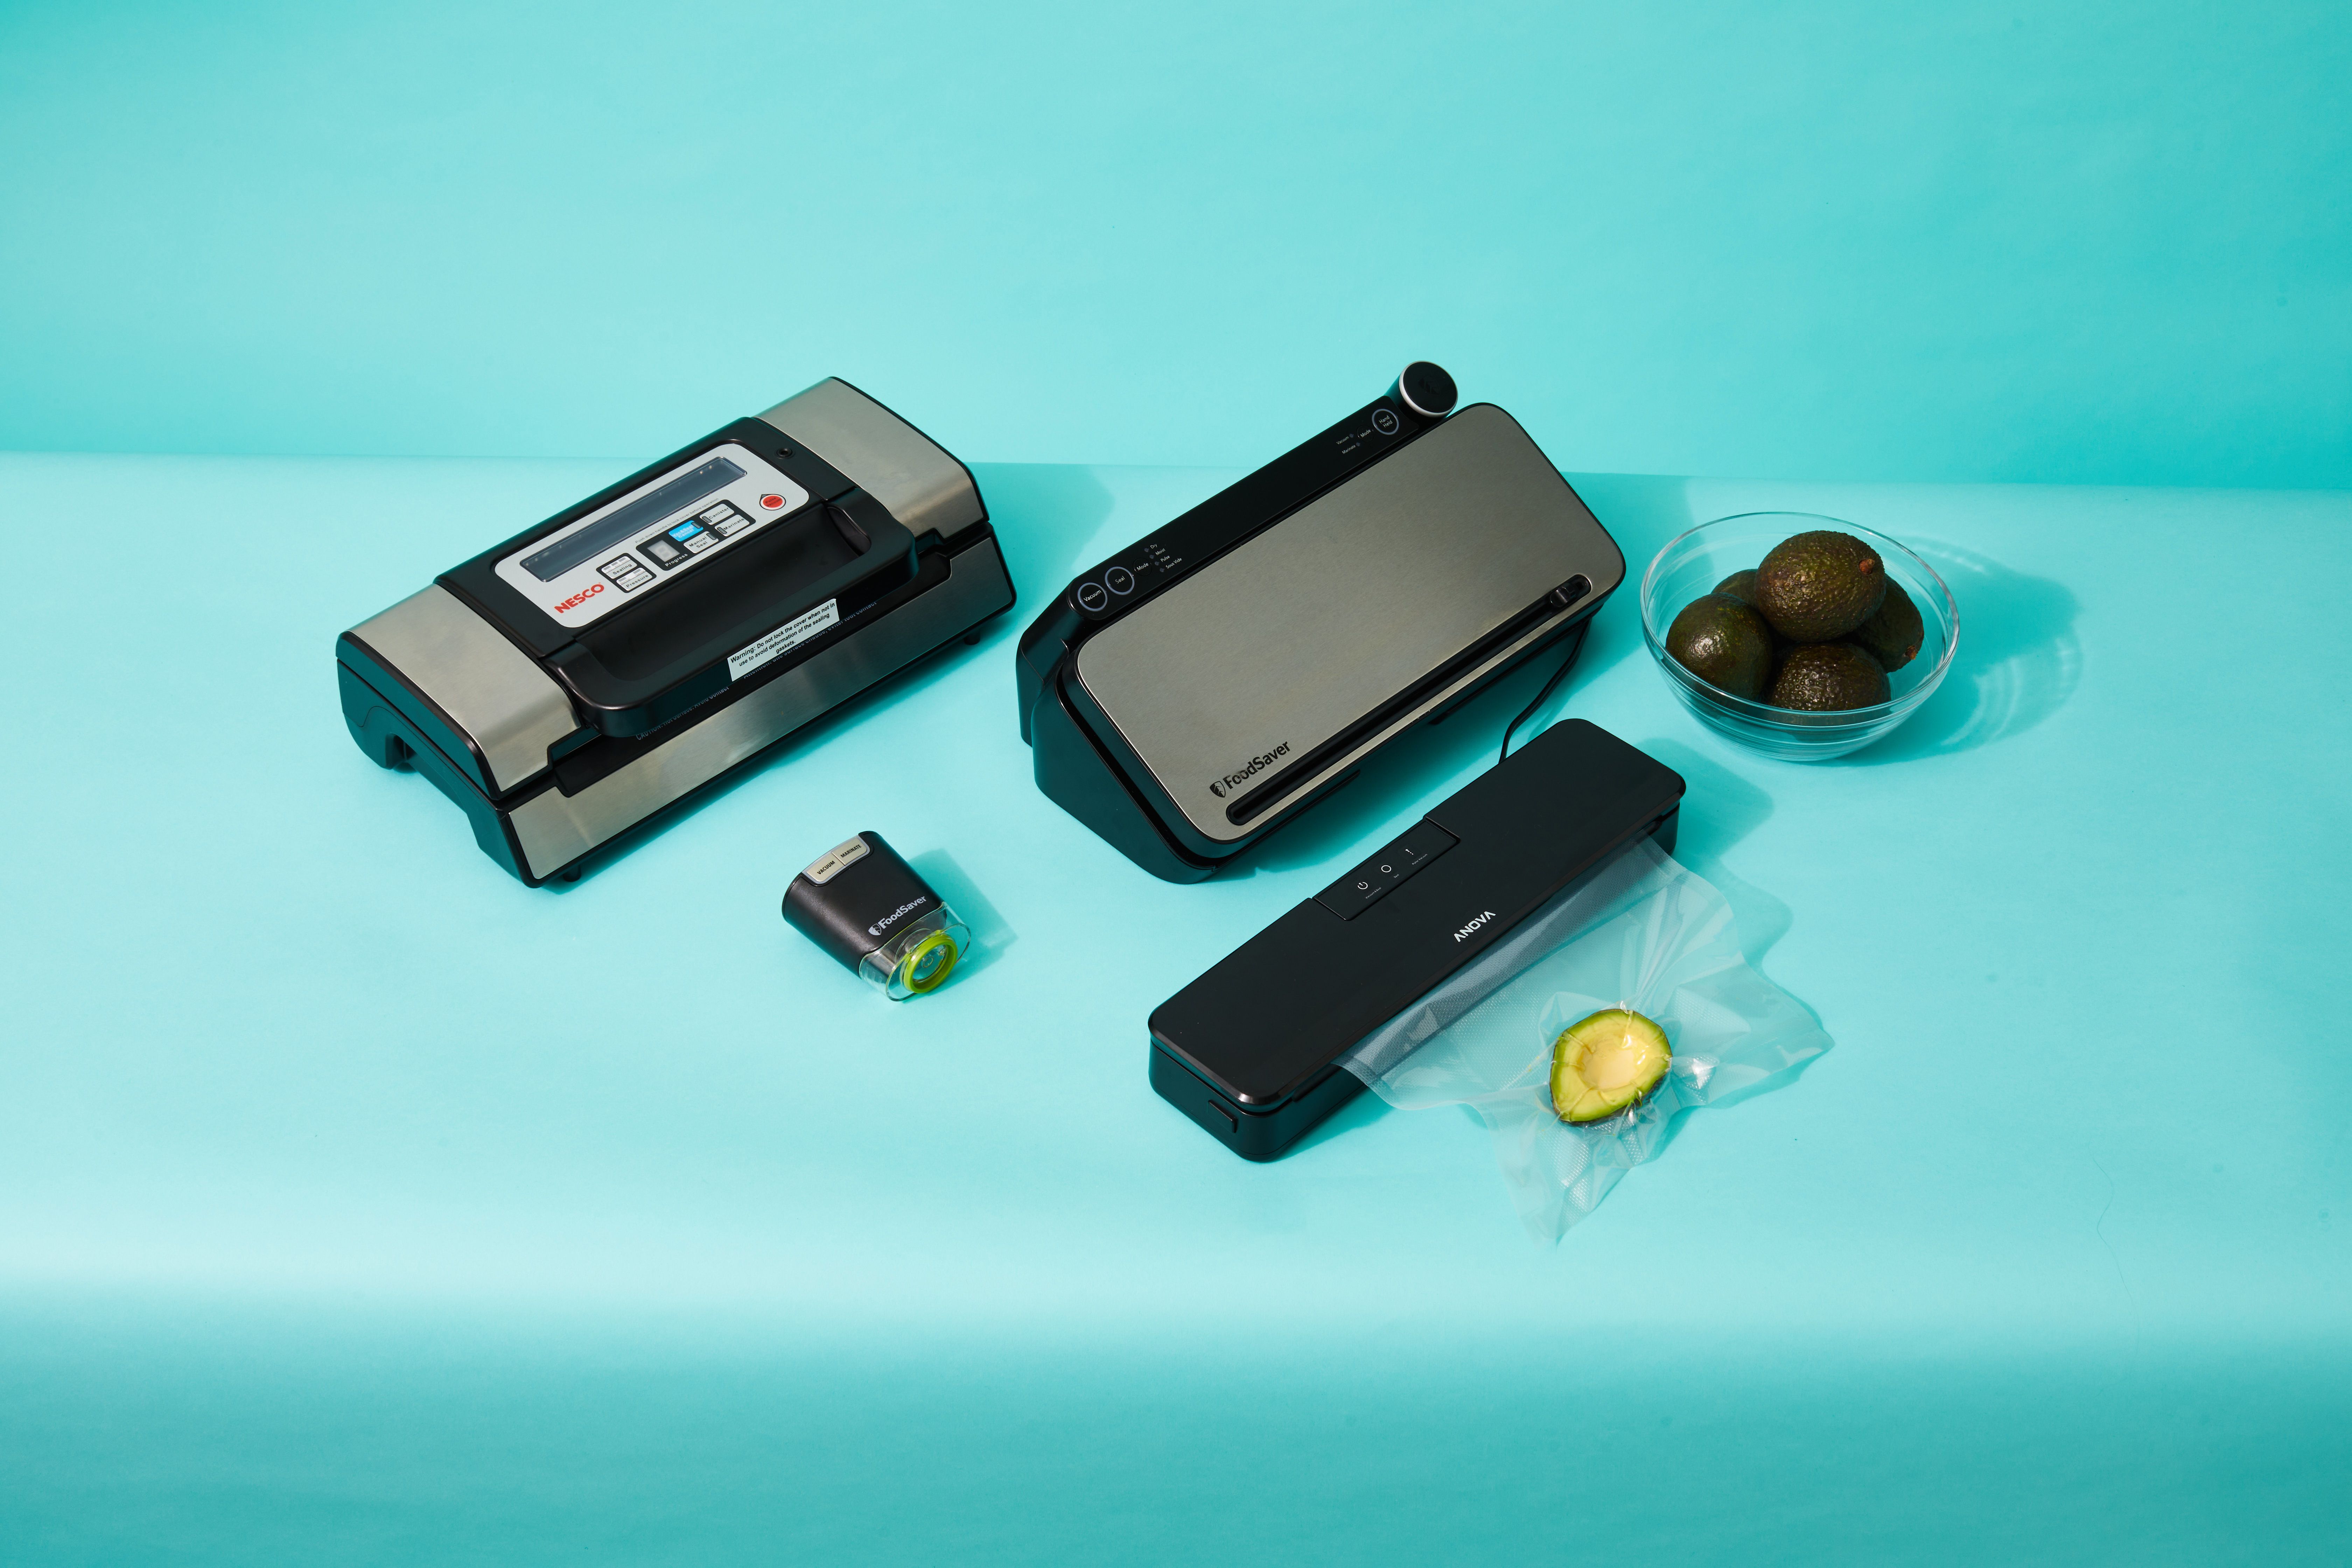 FoodSaver Cordless Handheld Food Vacuum Sealer, Charger & 2 Gallon